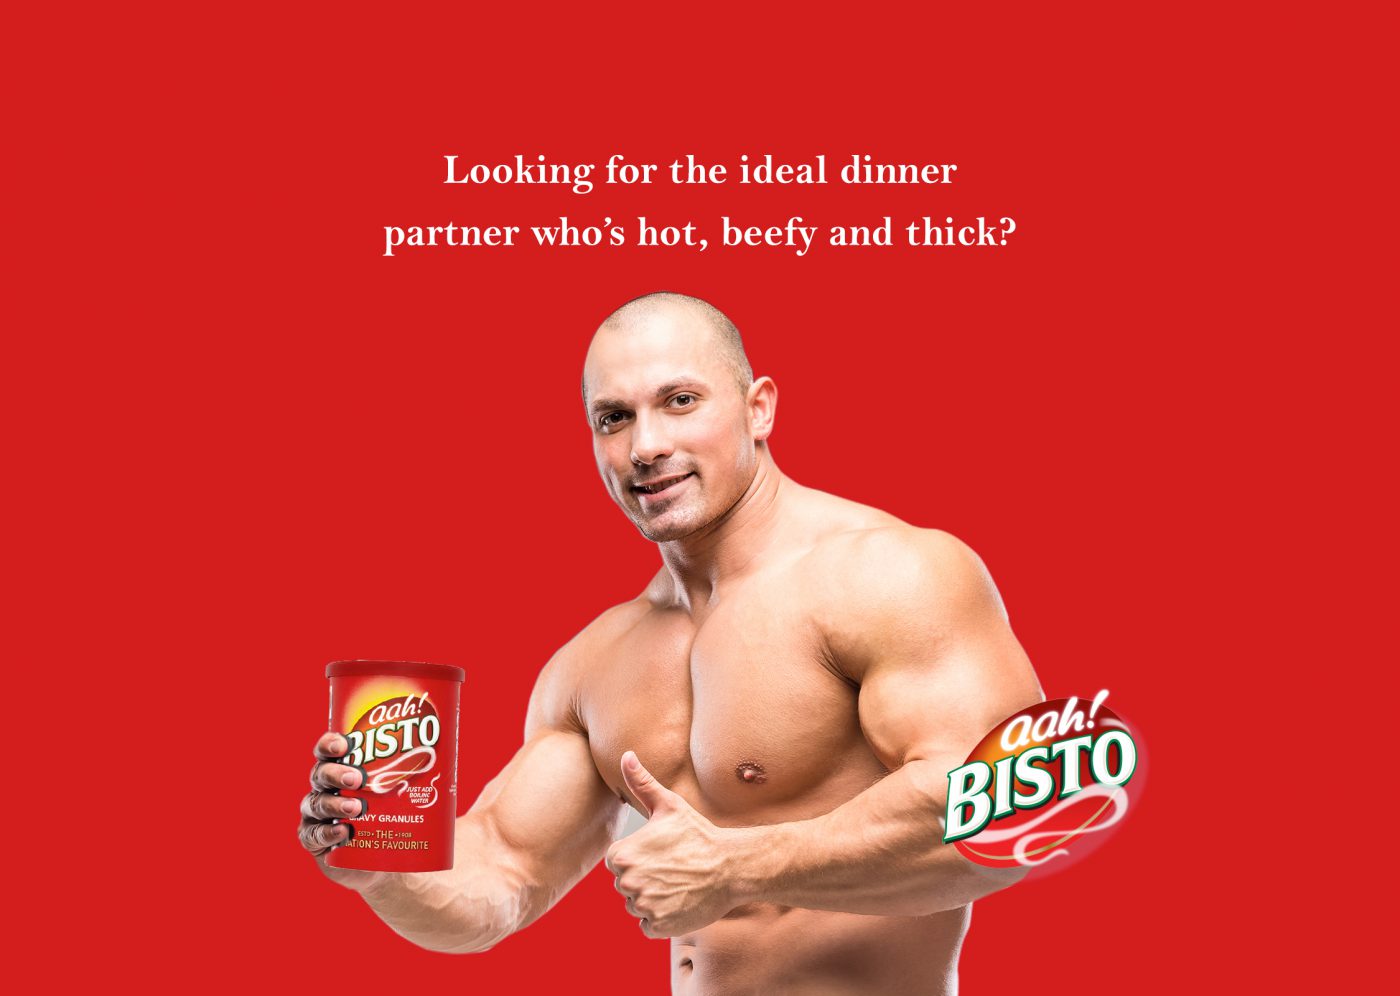 bisto-hot-beefy-thick